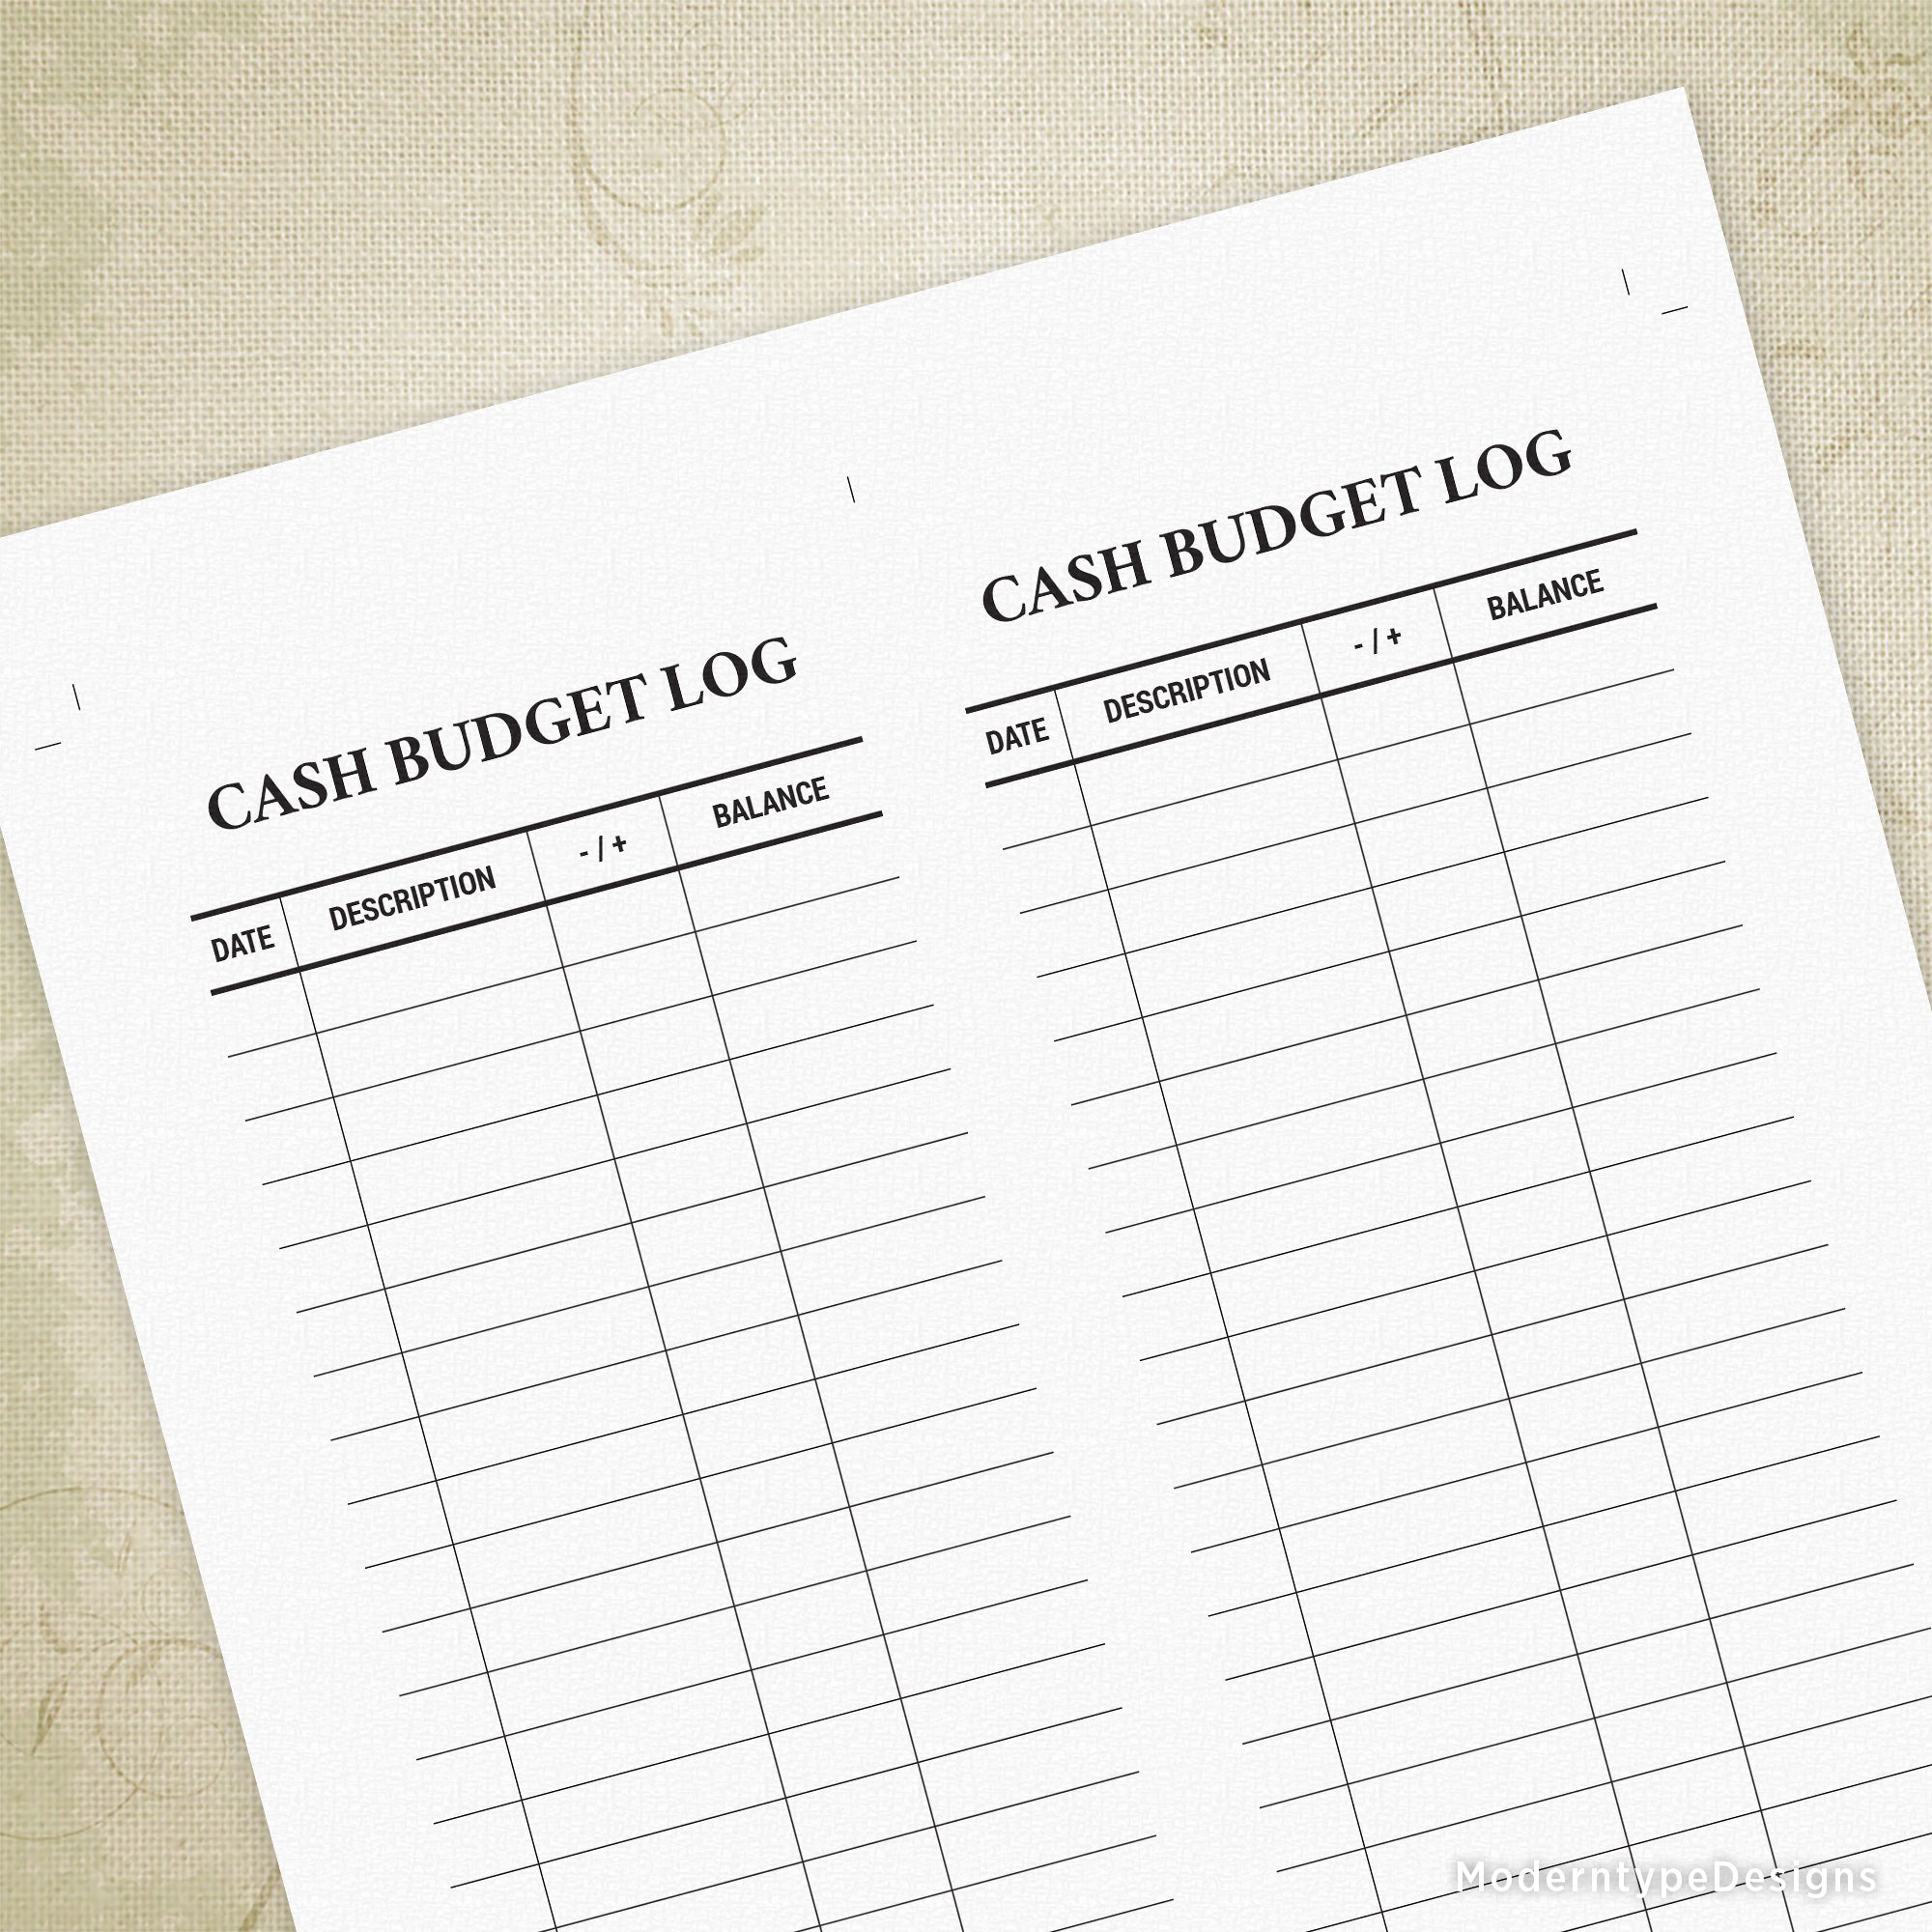 Cash Envelope Breakdown Worksheet | Cash Stuffing | Spending | Cash PDF |  Budget Insert | | 8.5 x 11 | | INSTANT DOWNLOAD 